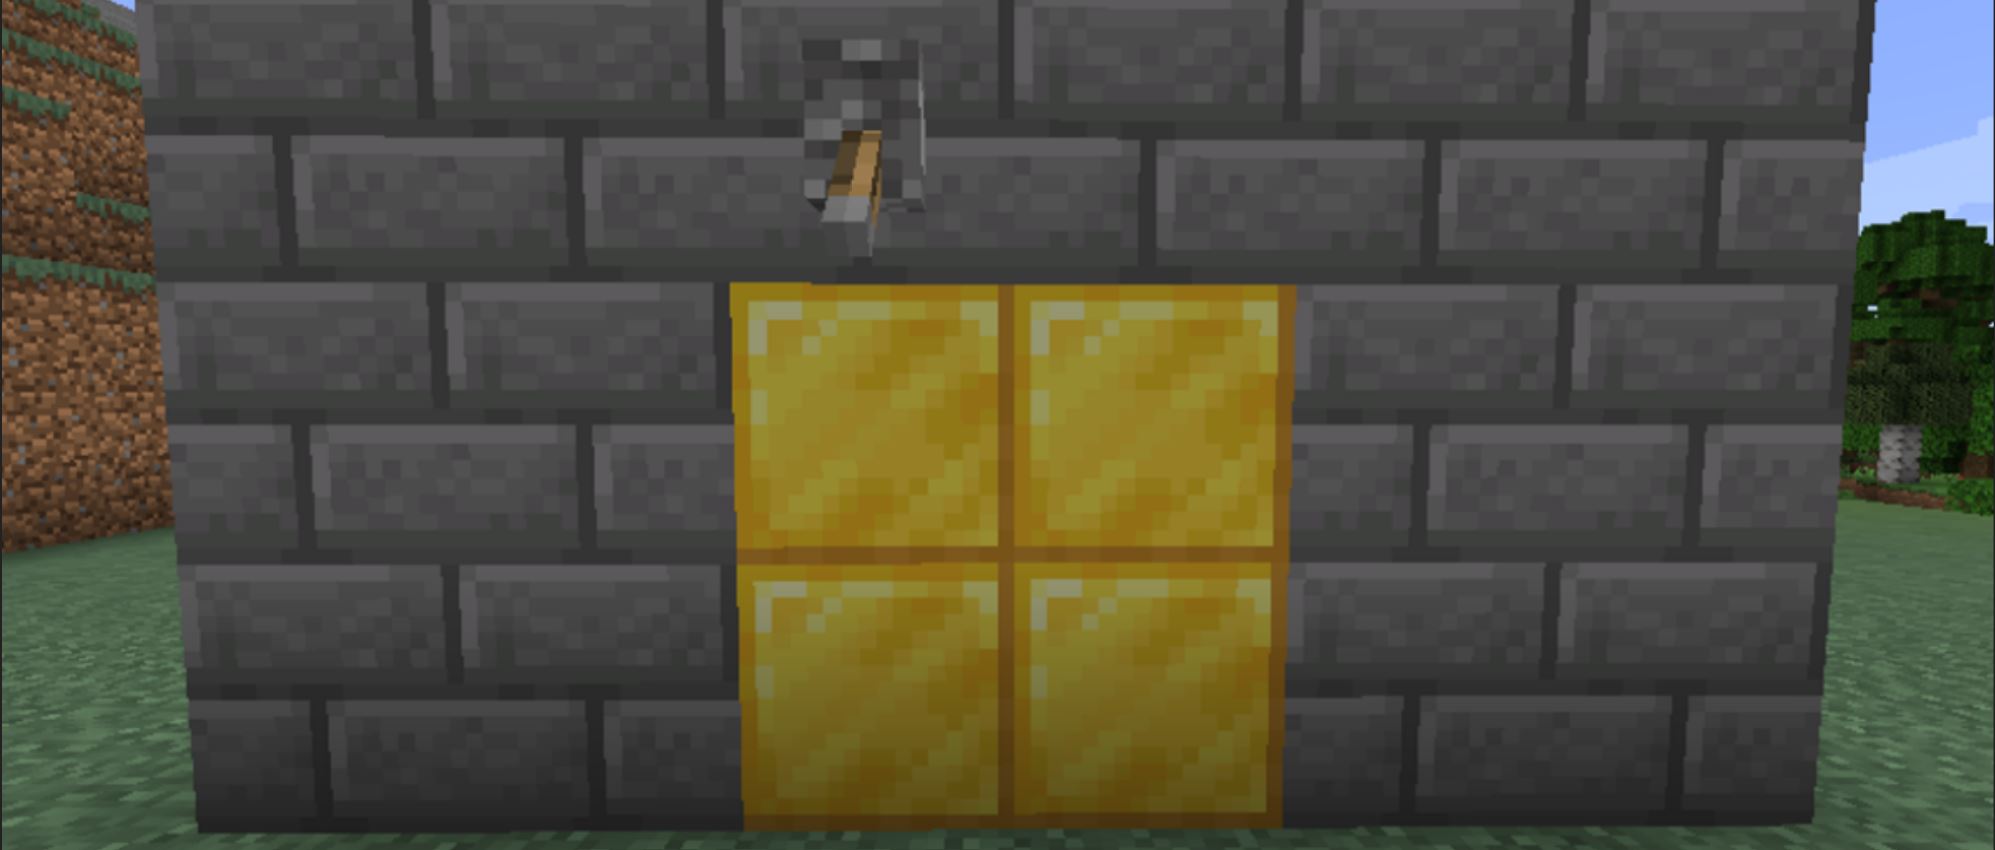 How to Make A Hidden Door In Minecraft, To Easily Hide Away A Secret Room In Your Base